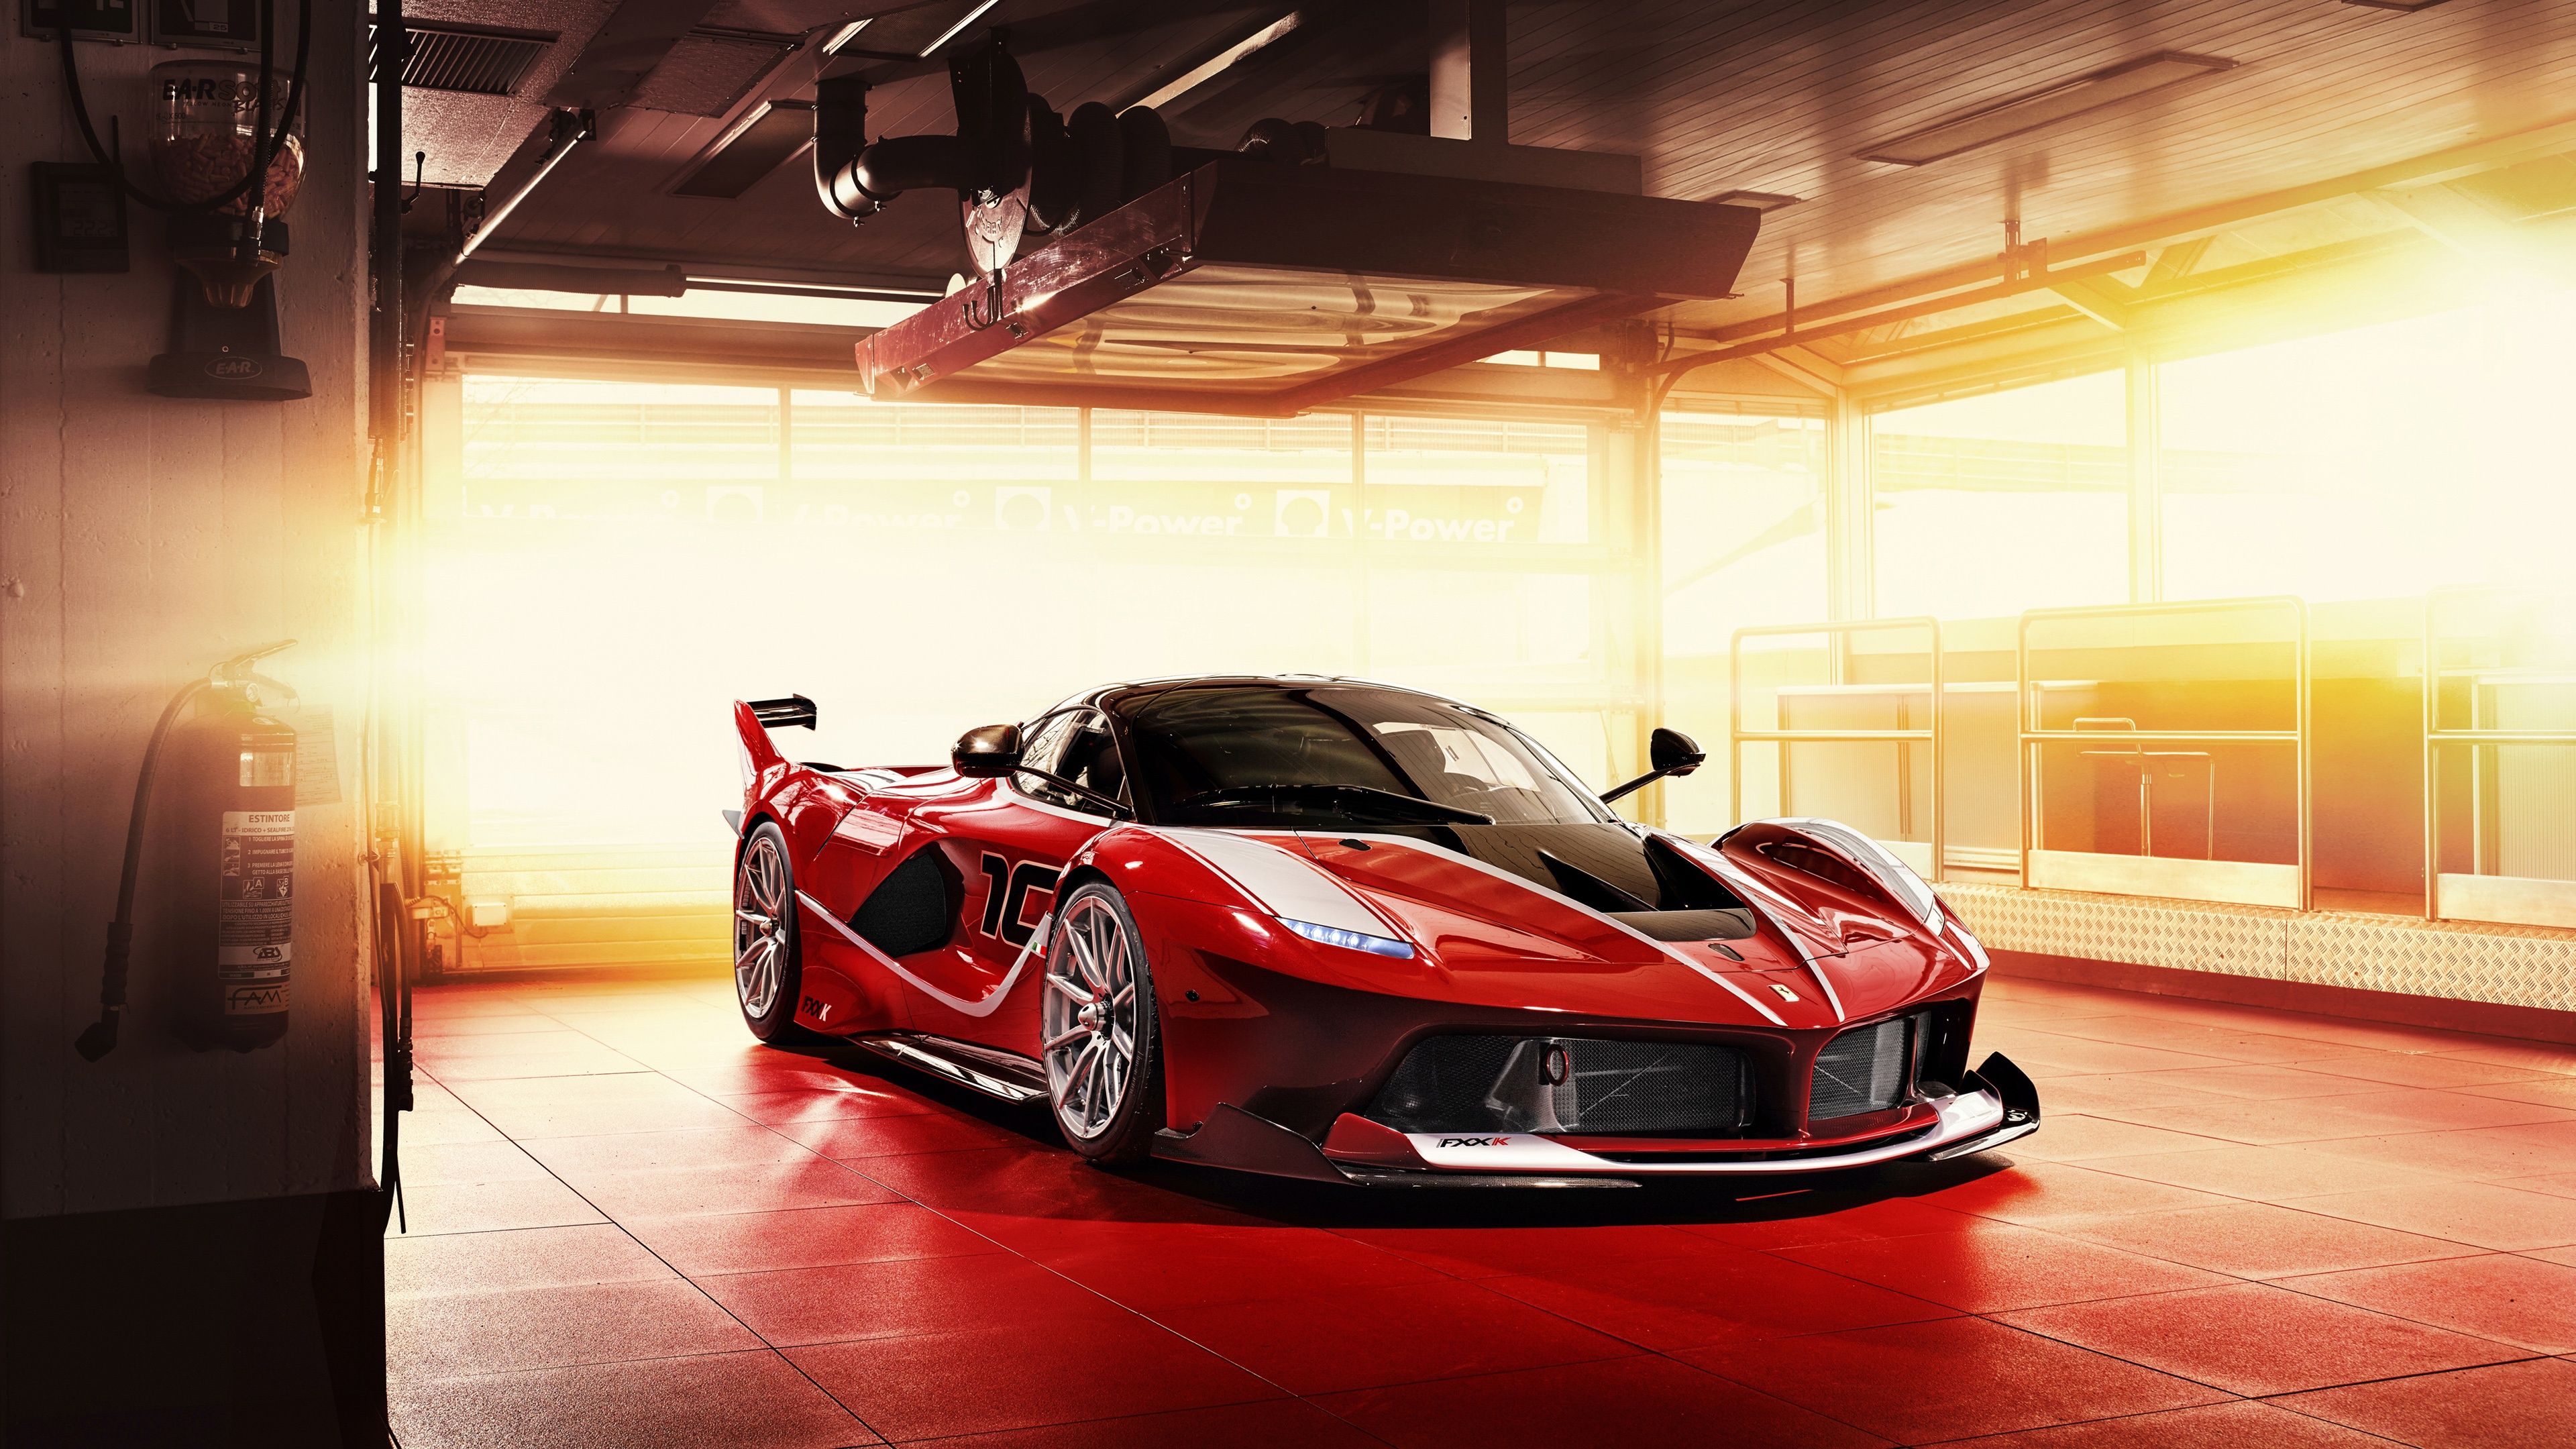 Ferrari Fondos de pantalla 3840x2160, # XMODZB6 | WallpapersExpert.com